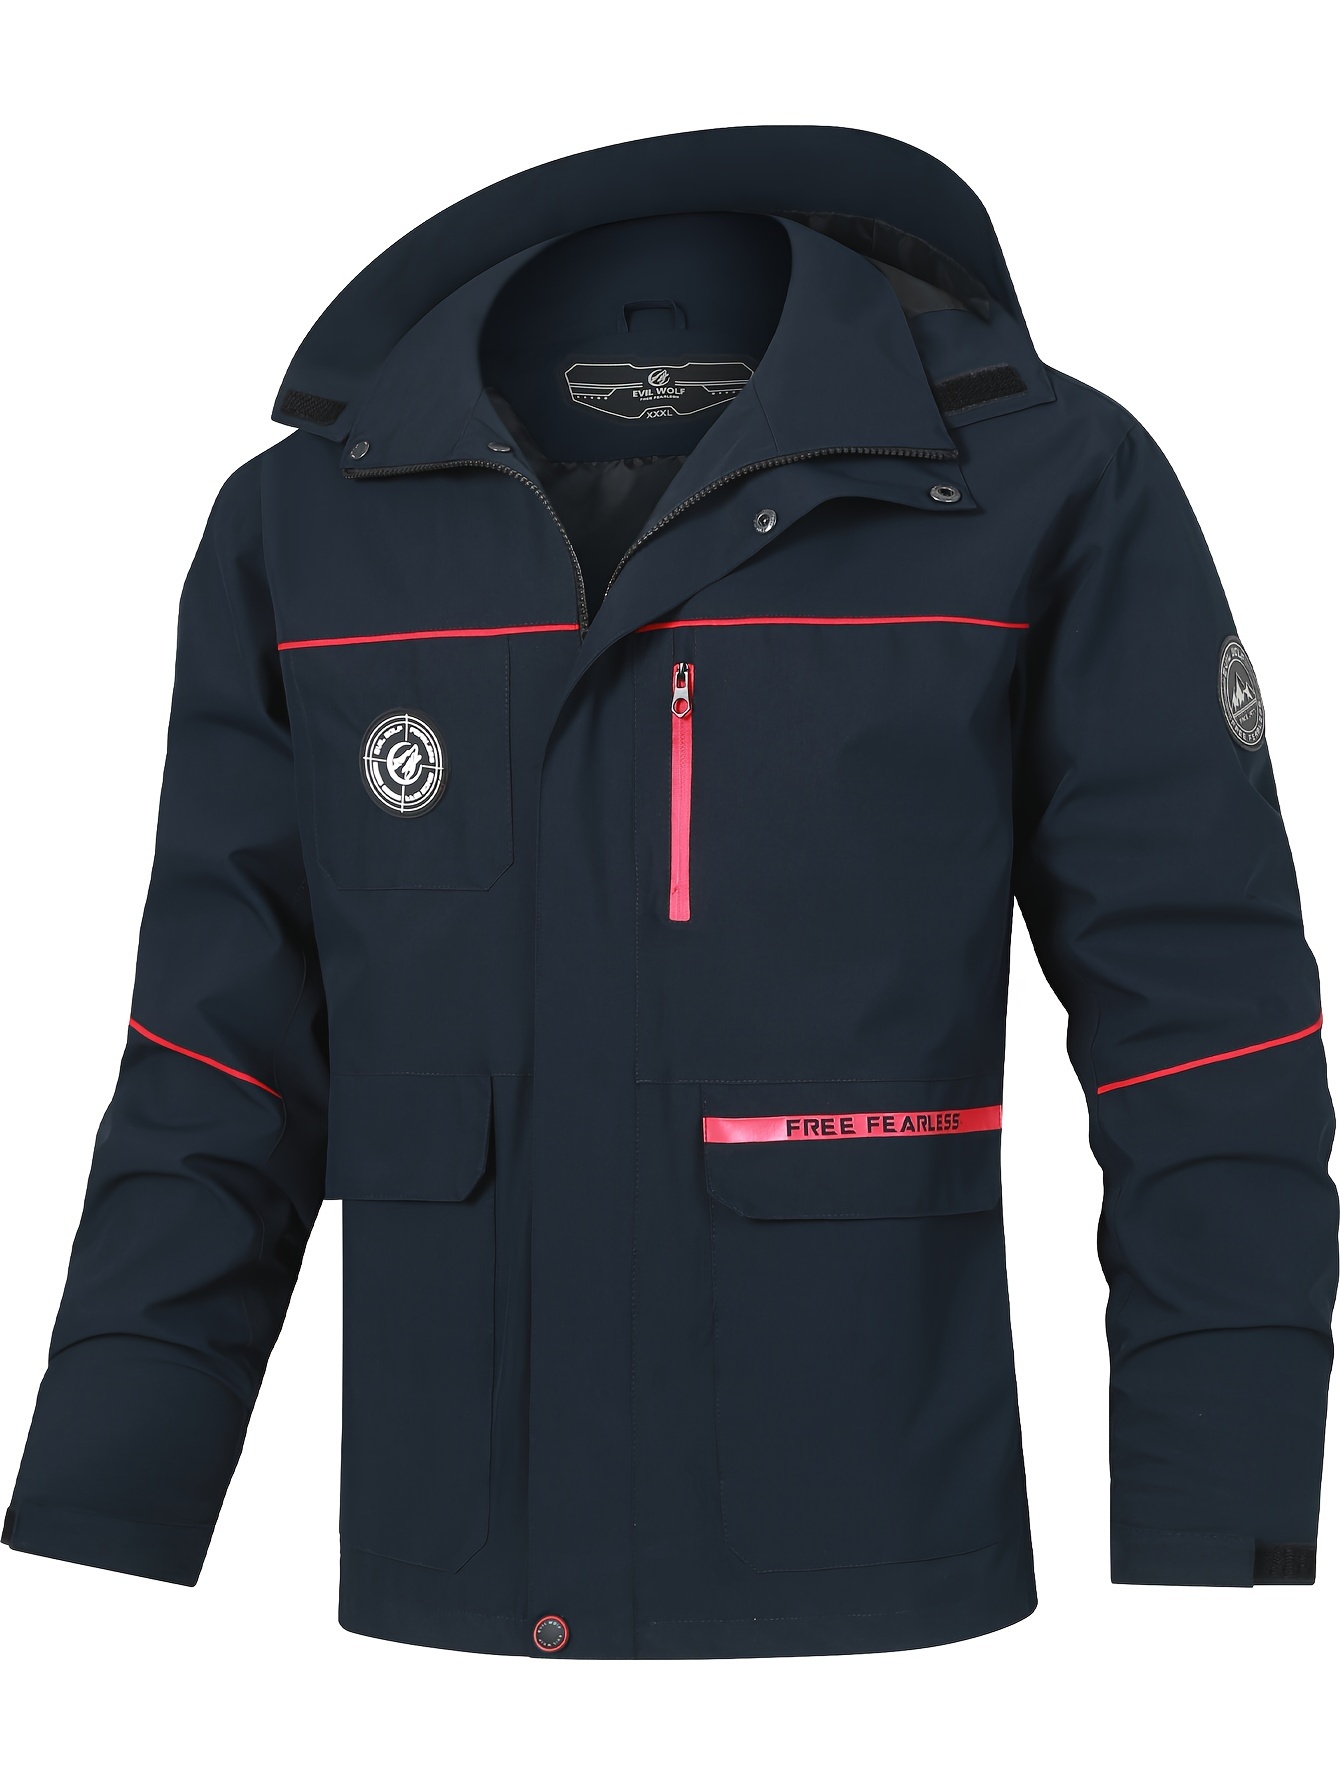 mens casual hooded windbreaker jacket multi pocket jacket for outdoor activities